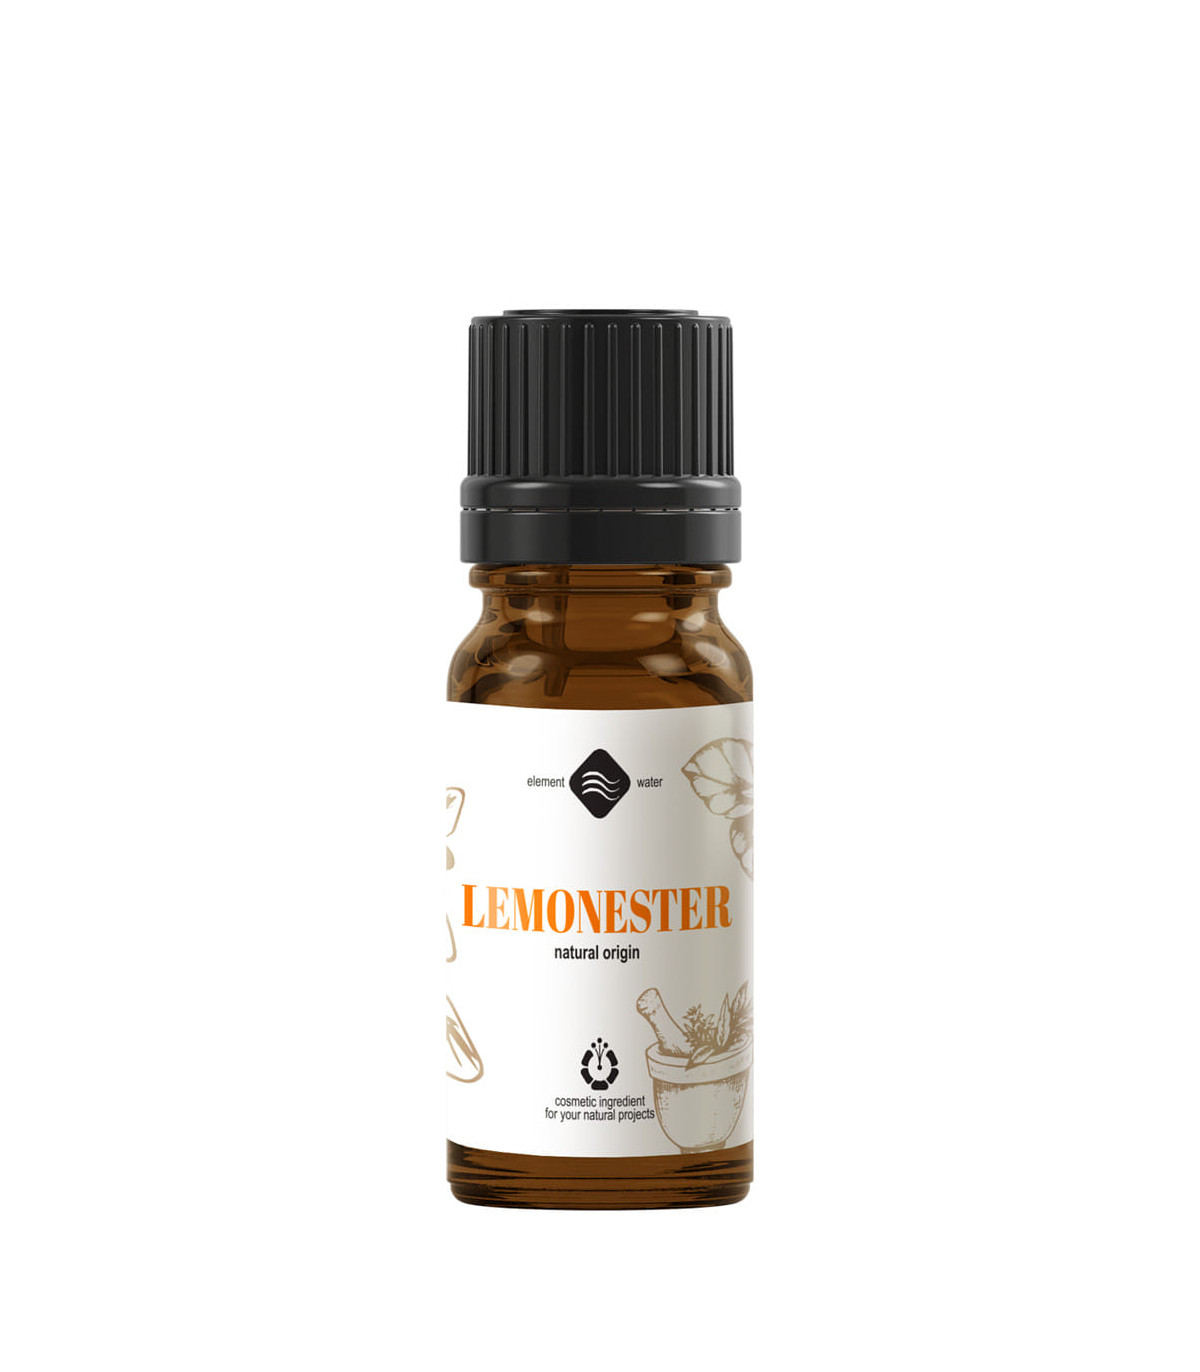 Lemonester, agent deodorant